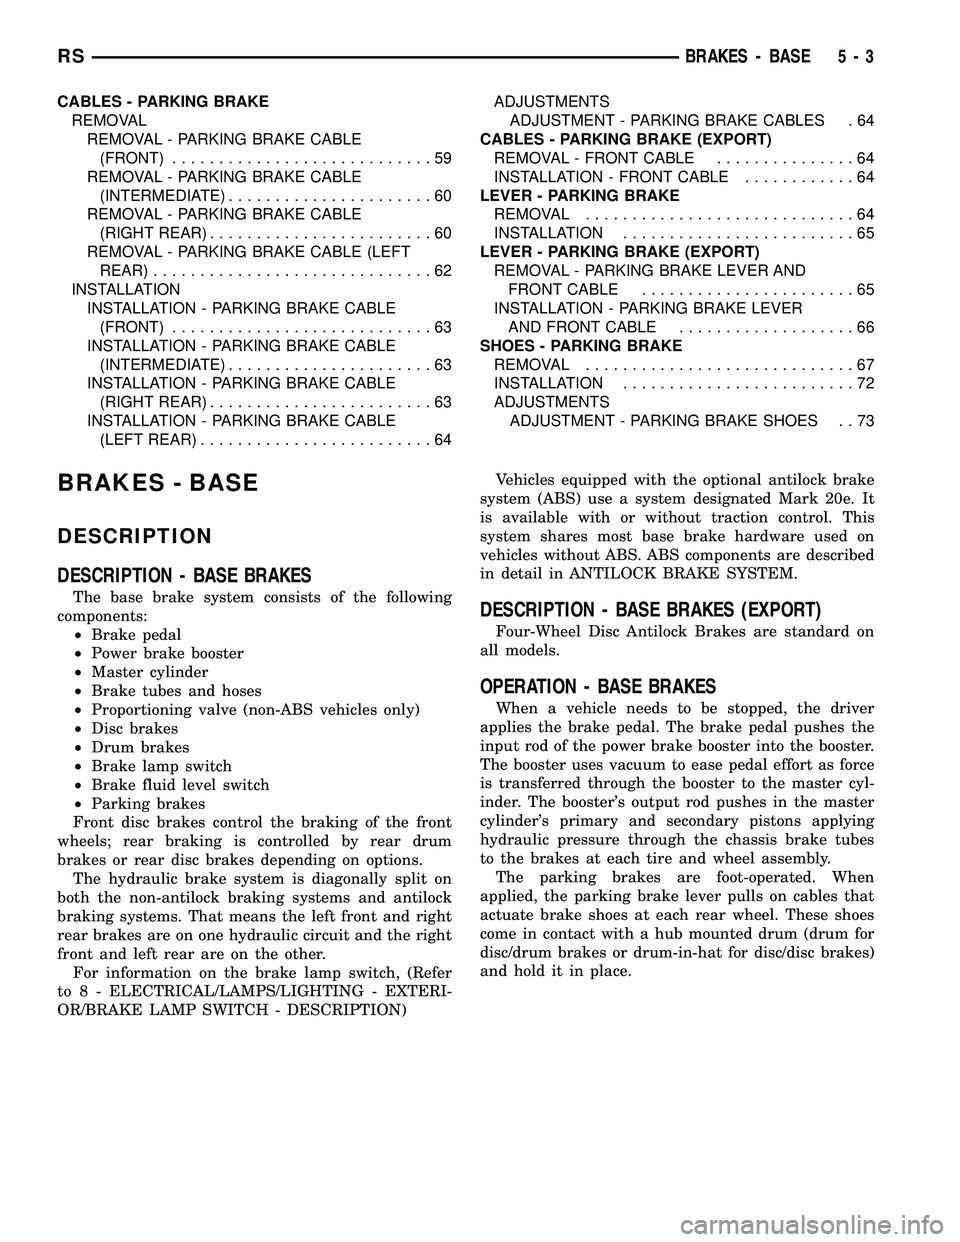 CHRYSLER VOYAGER 2004  Service Manual CABLES - PARKING BRAKE
REMOVAL
REMOVAL - PARKING BRAKE CABLE
(FRONT)............................59
REMOVAL - PARKING BRAKE CABLE
(INTERMEDIATE)......................60
REMOVAL - PARKING BRAKE CABLE
(R